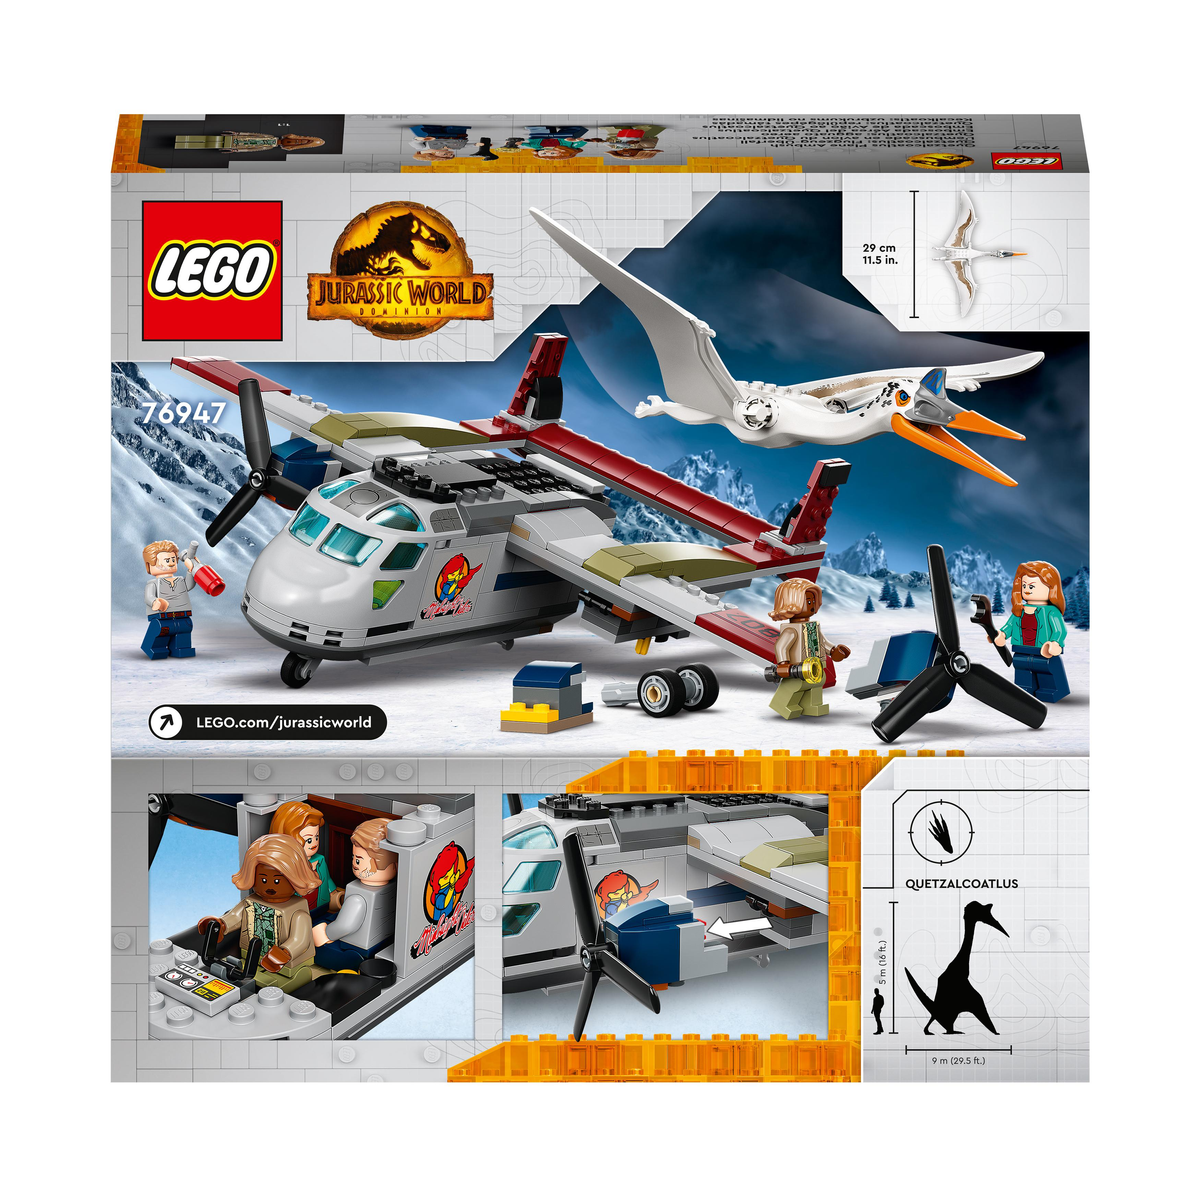 76947 LEGO FLUGZEUG-ÜBERFALL QUETZALCOATLUS: Bausatz